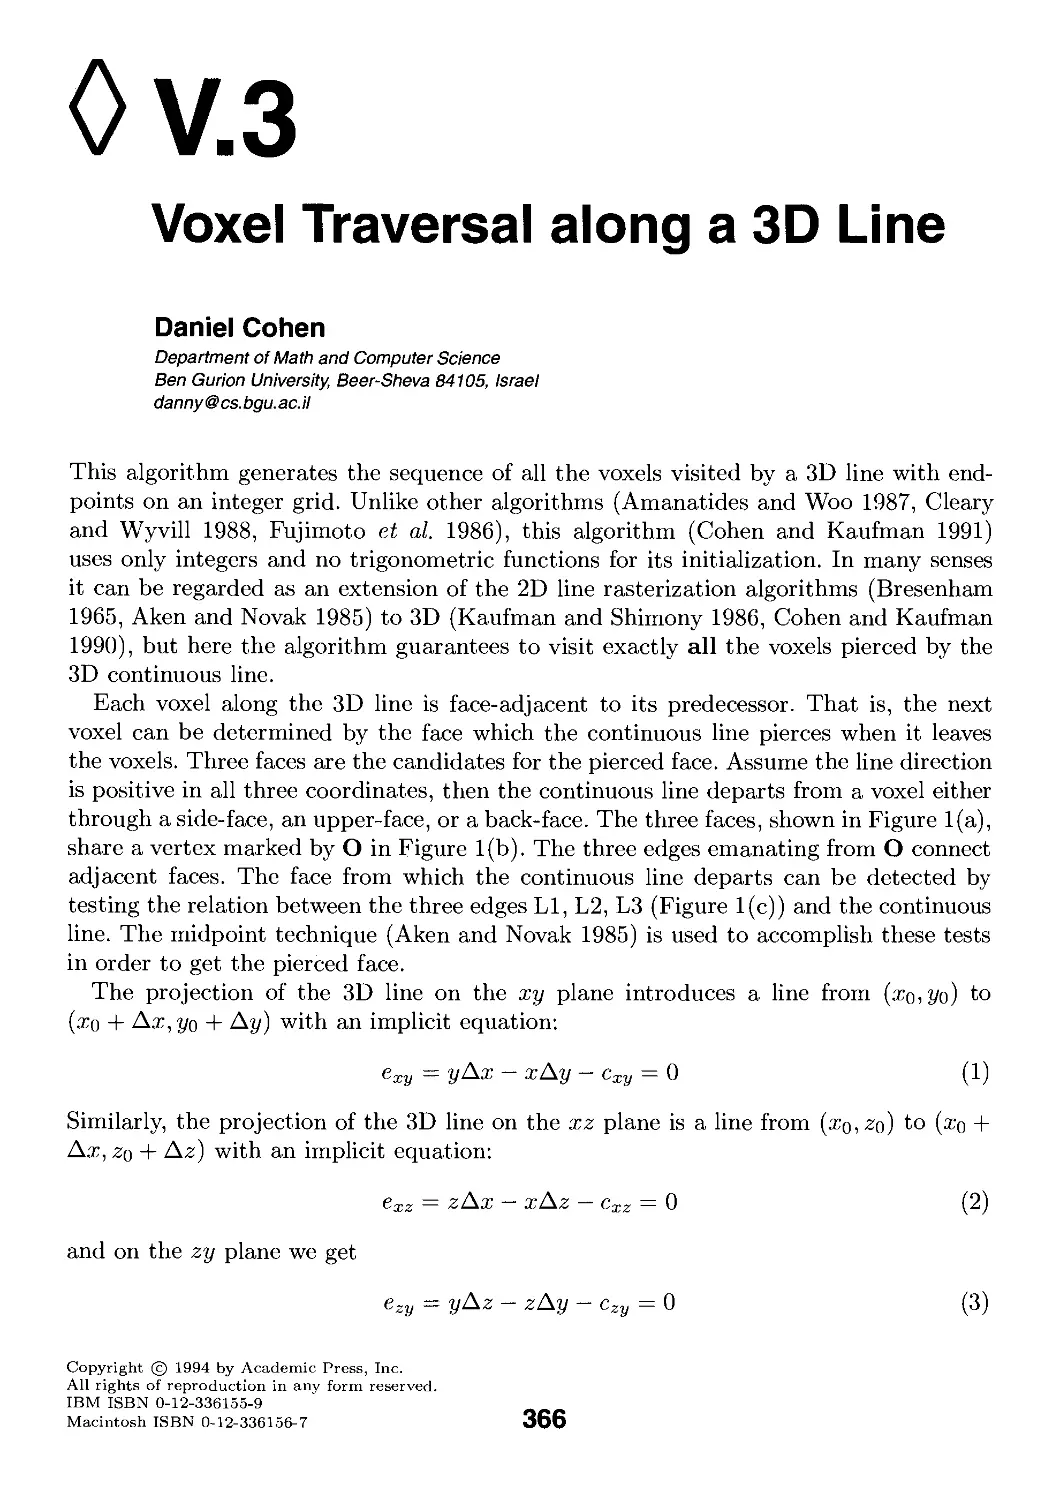 V.3. Voxel Traversal along a 3D Line by Daniel Cohen